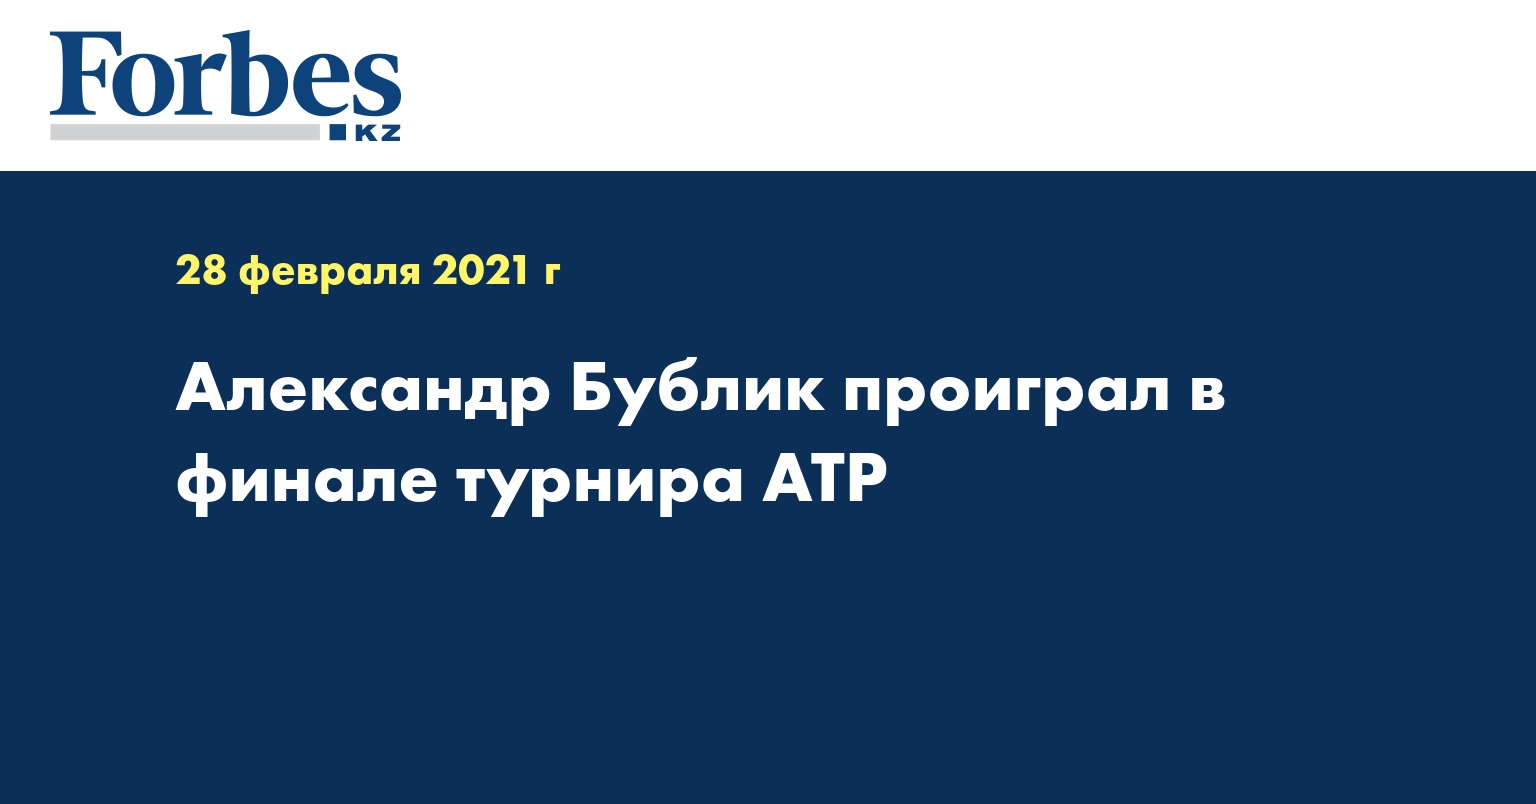 Александр Бублик проиграл в финале турнира ATP